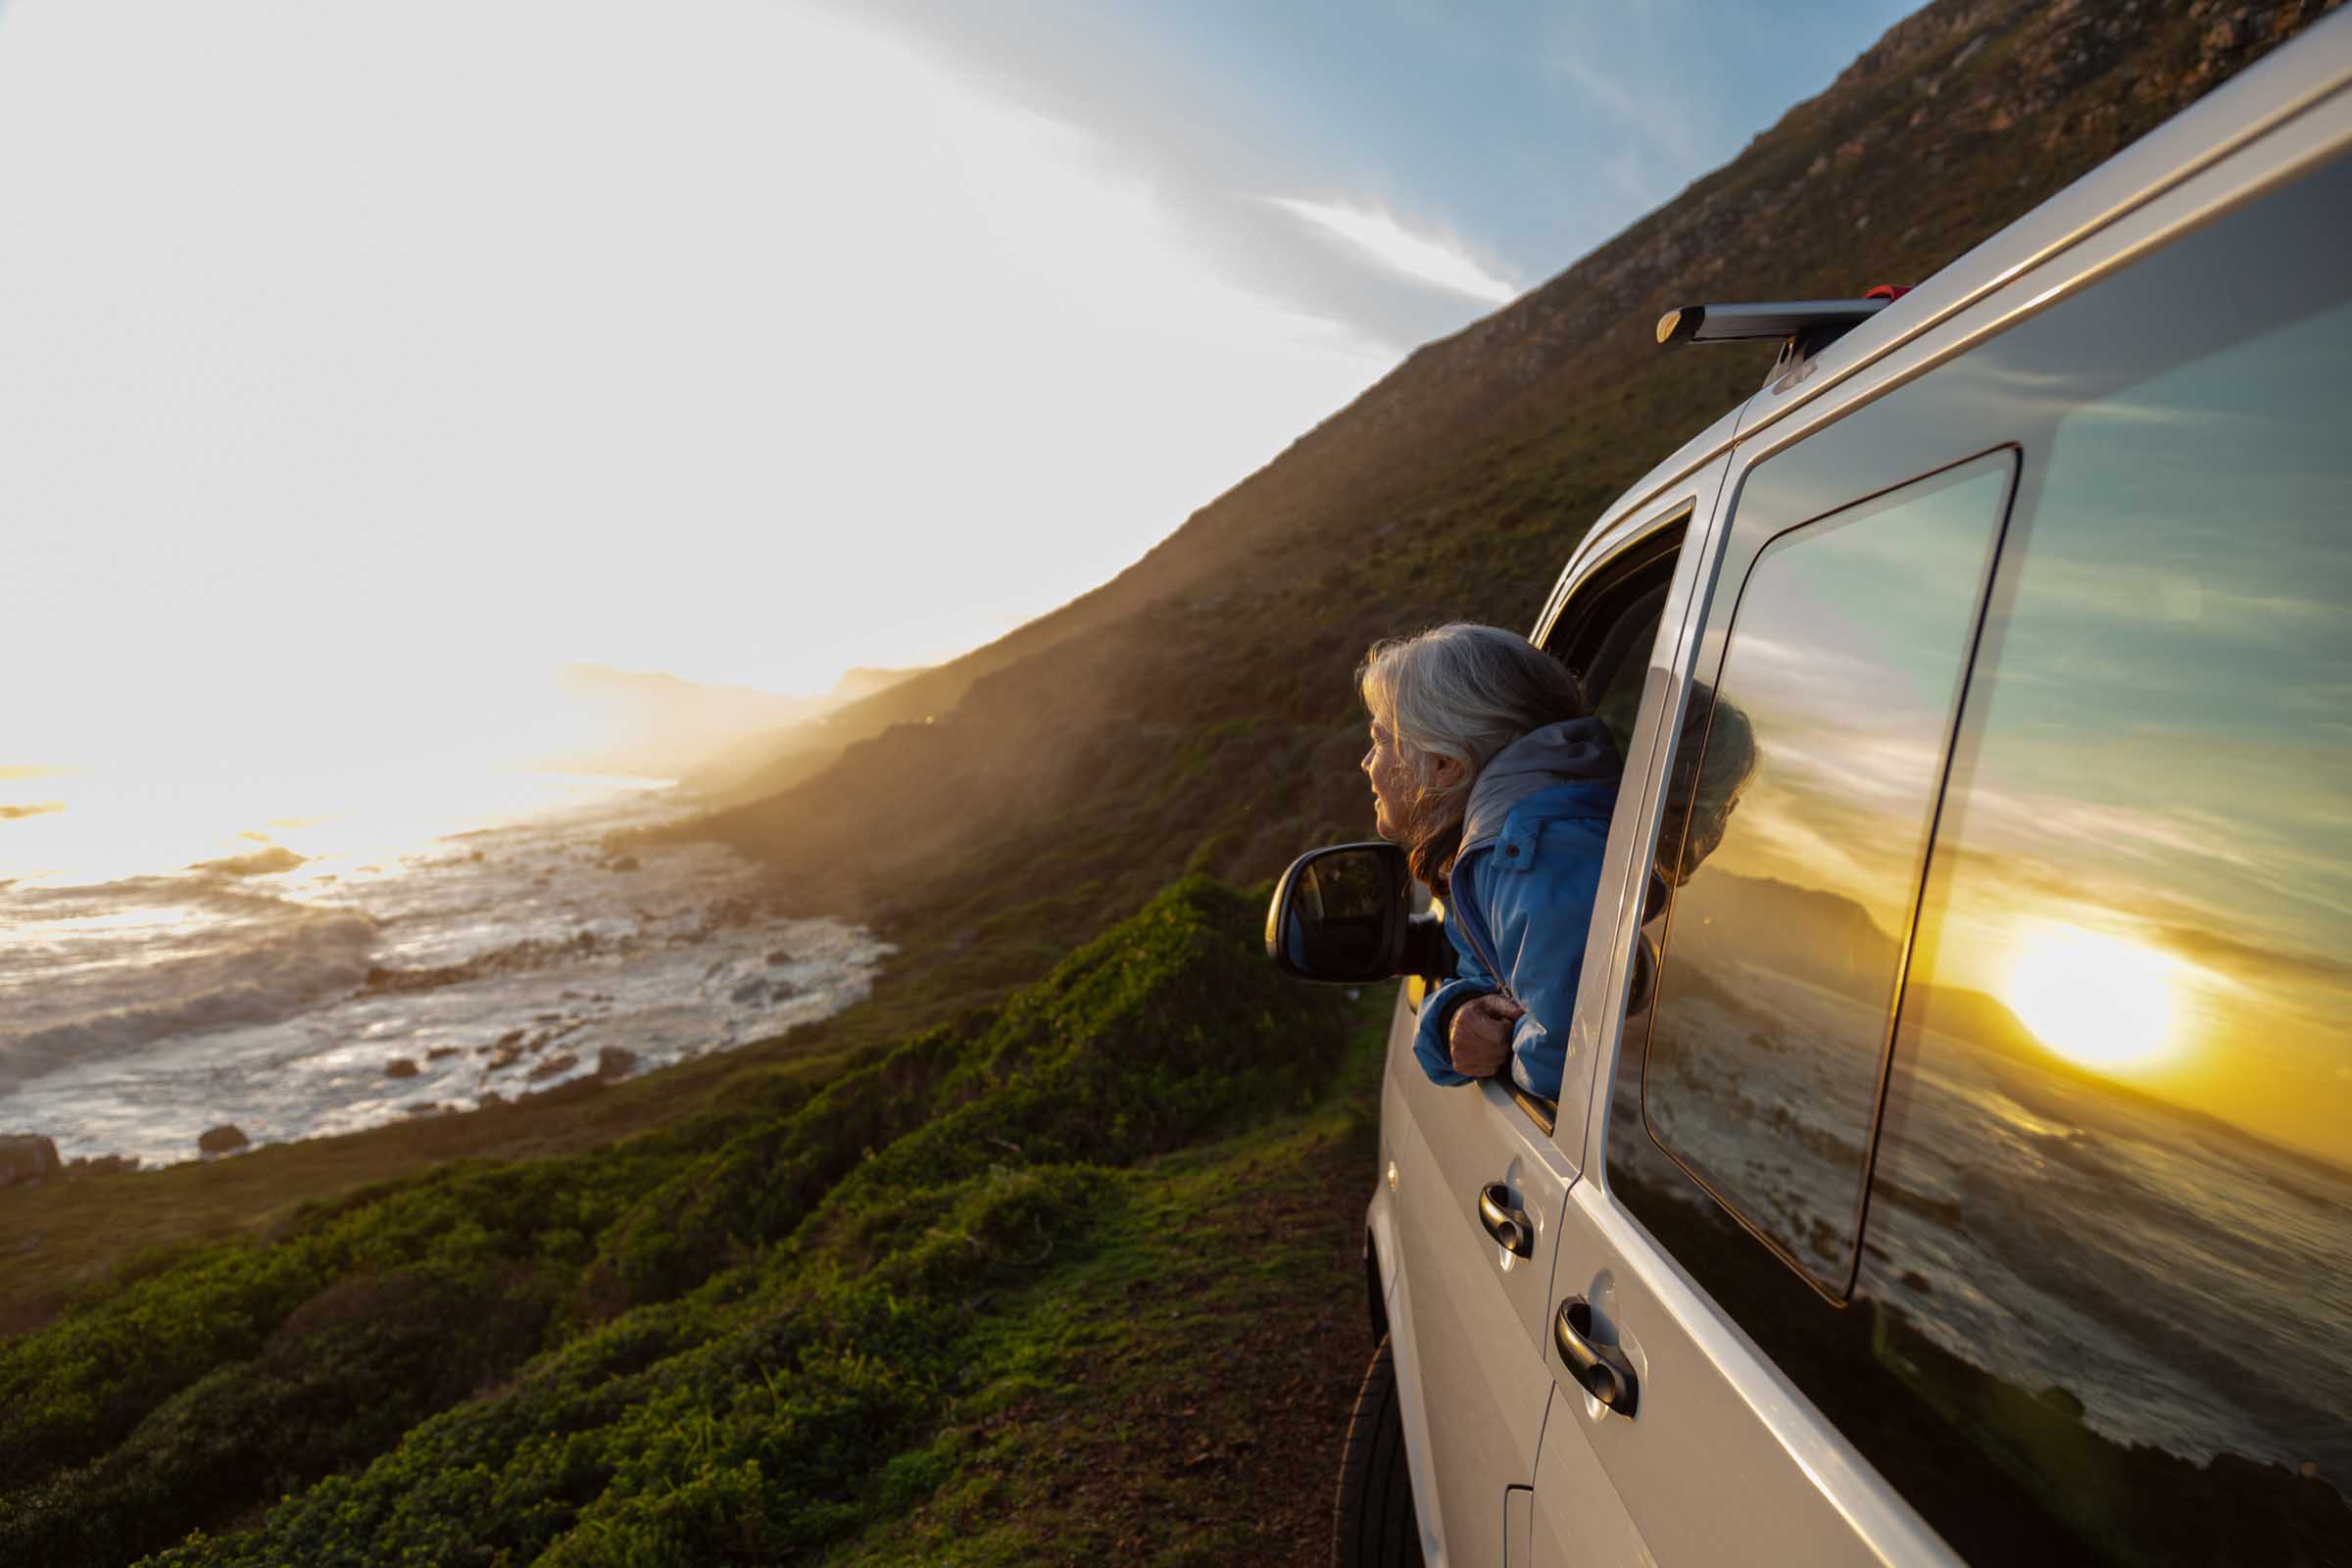 Senior woman watching sunset from her camper van